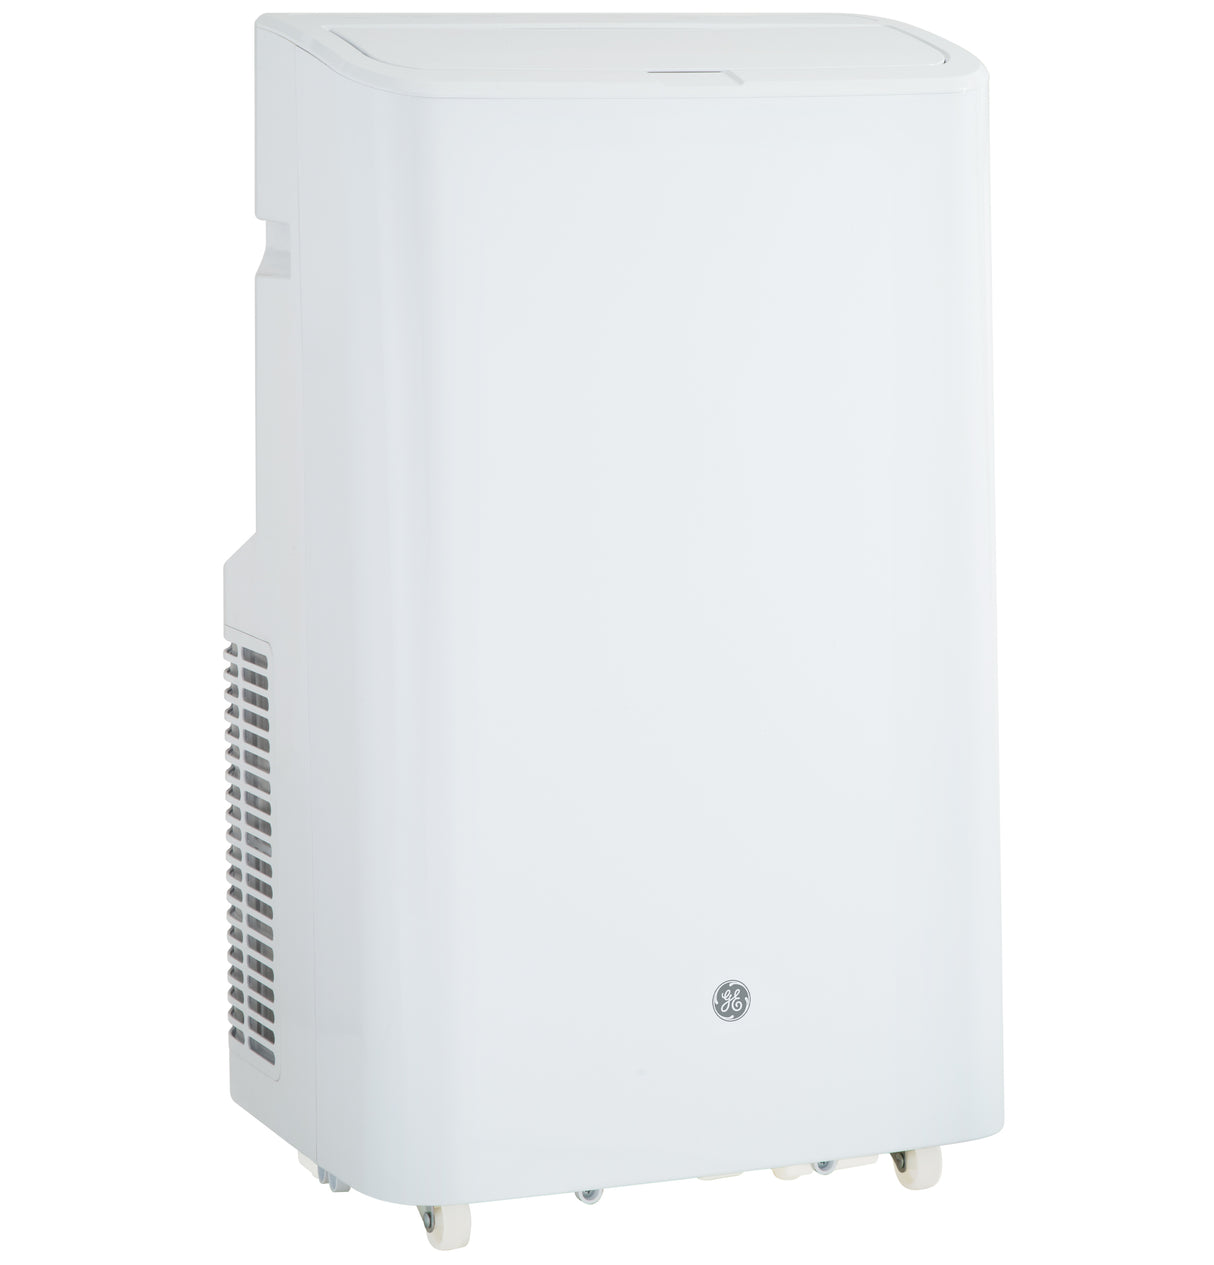 GE(R) 11,000 BTU Portable Air Conditioner for Medium Rooms up to 450 sq ft. (7,800 BTU SACC) - (APCA11YBMW)